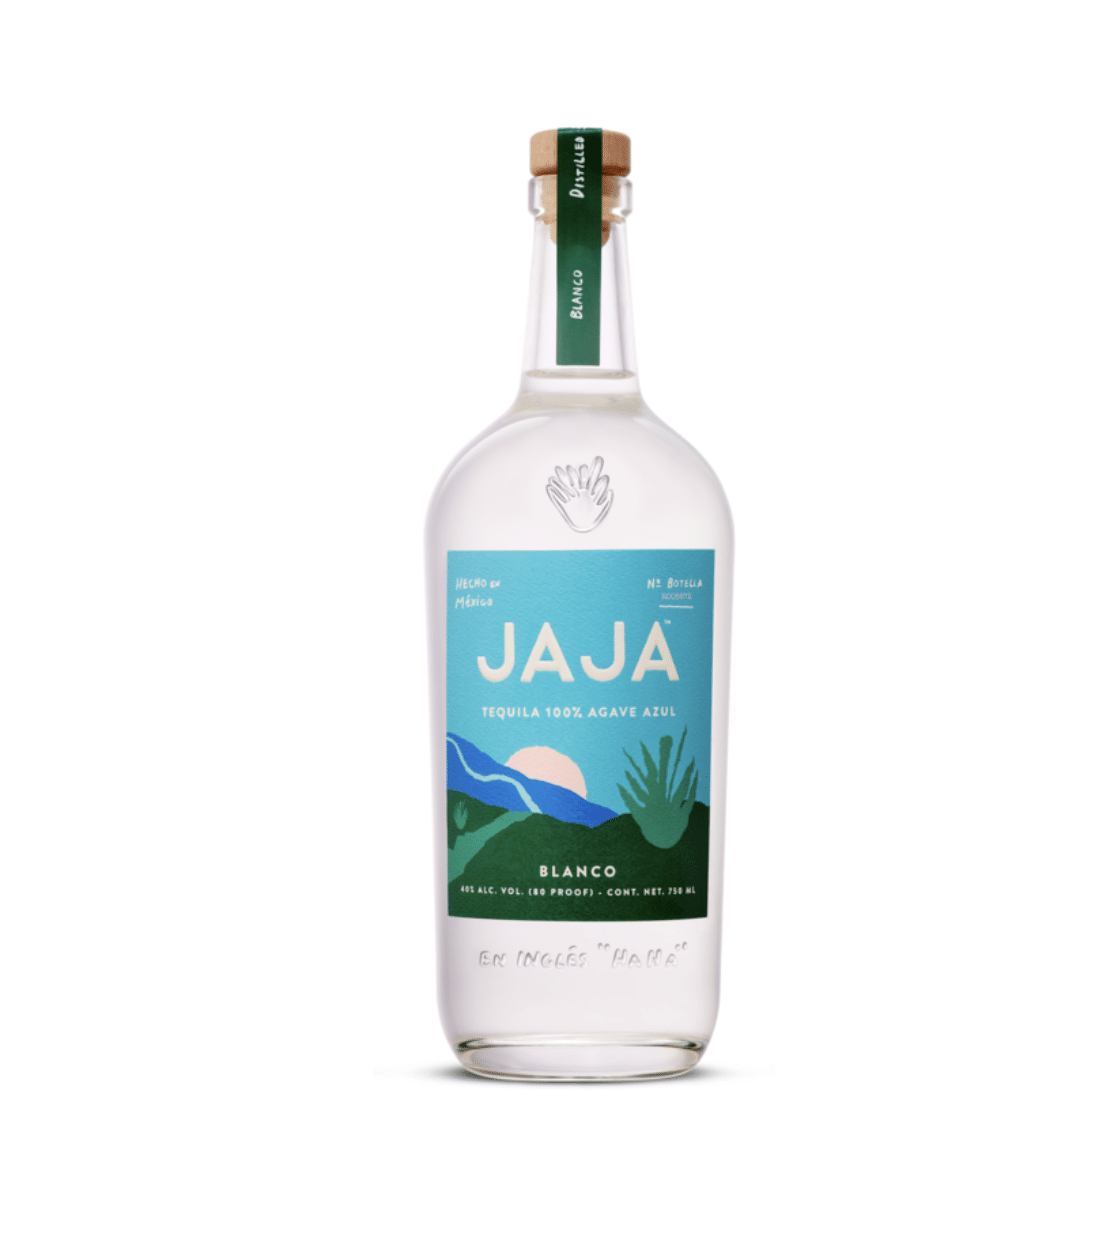 JAJA Blanco Tequila - Barbank